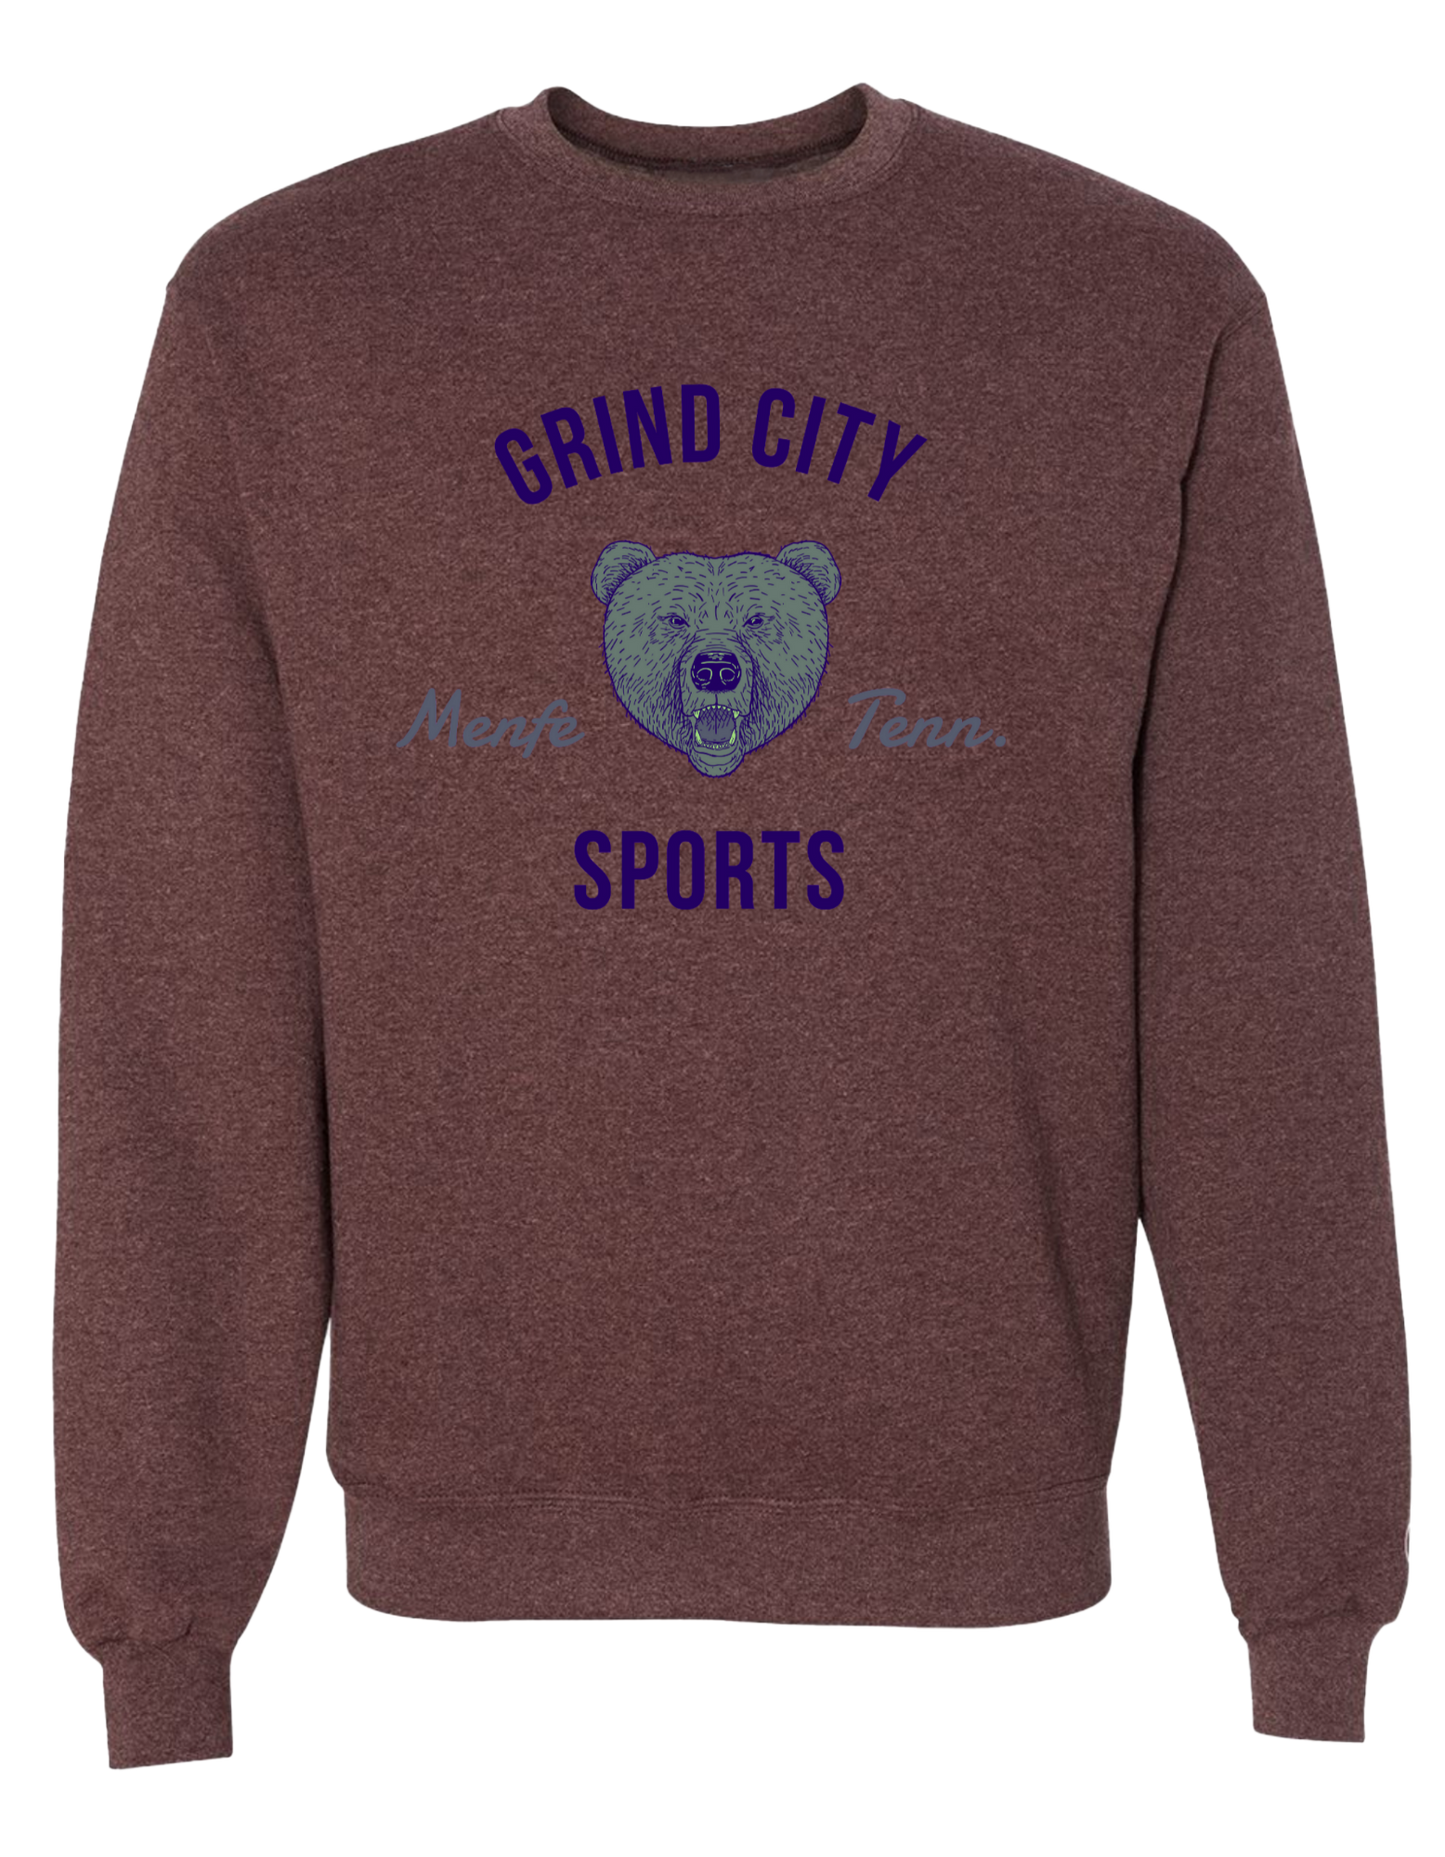 Grind City Sports Crew - Maroon Heather